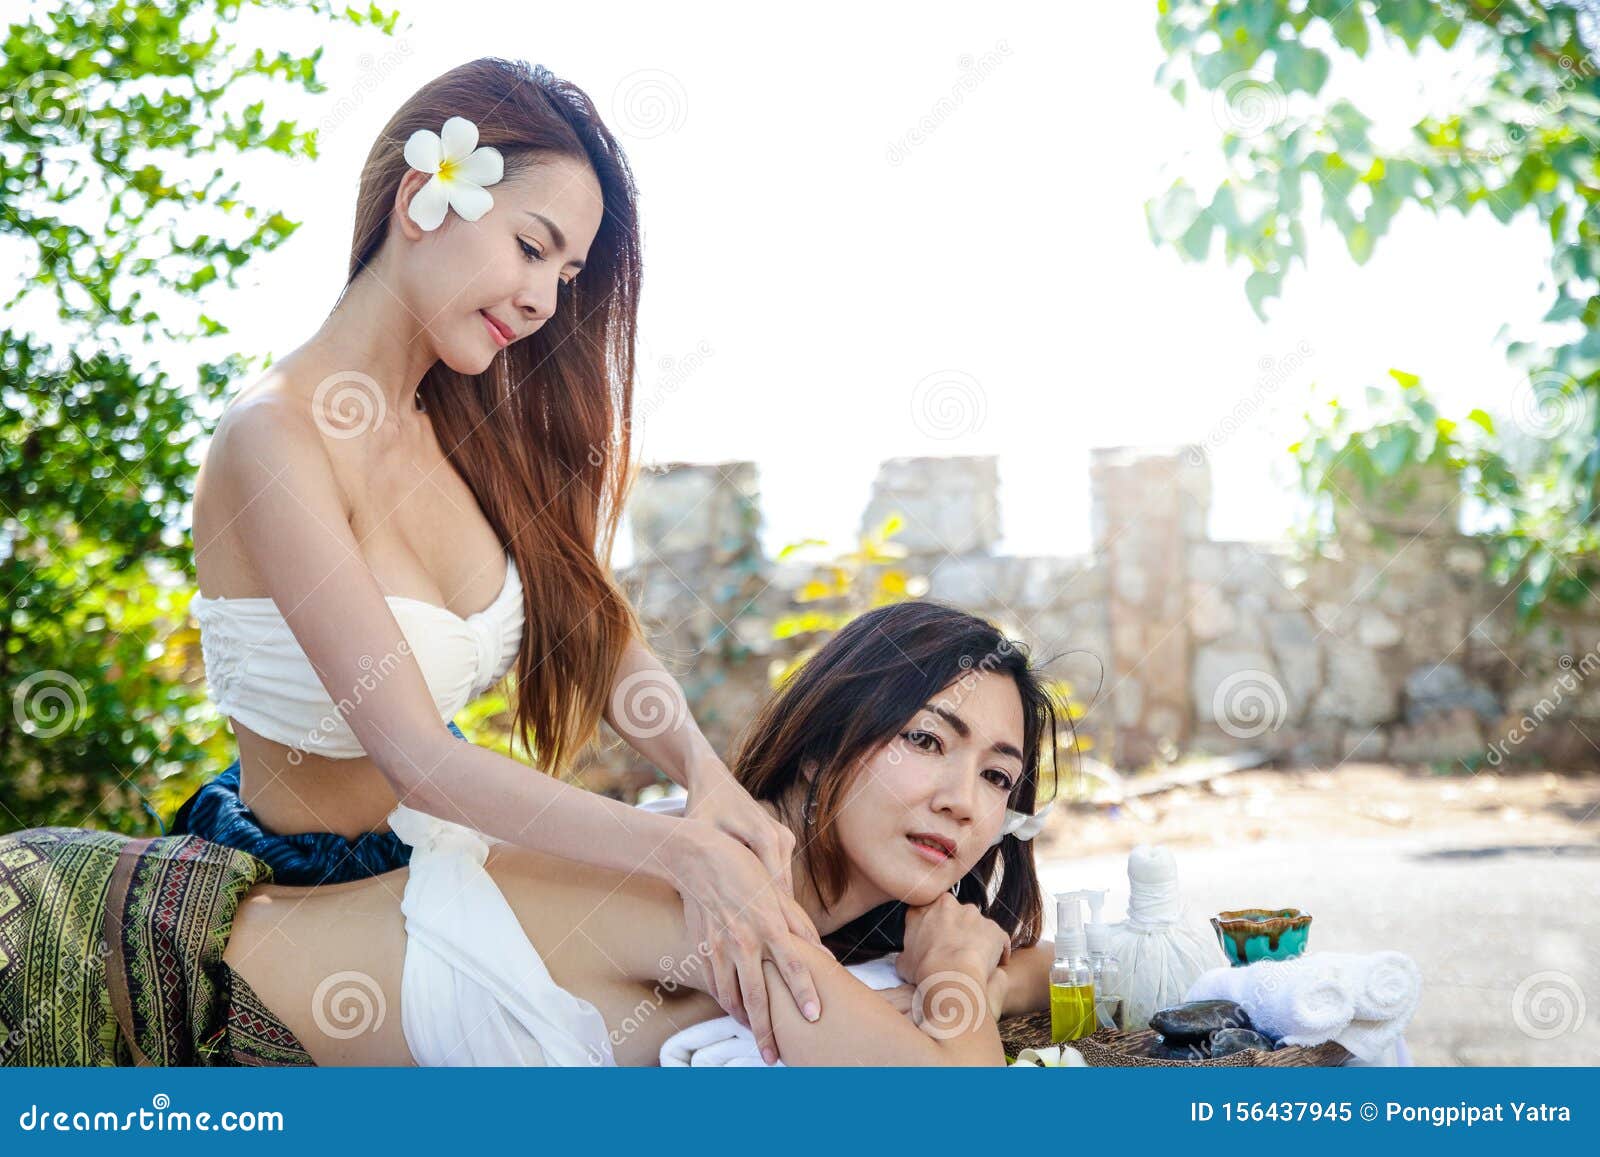 real asian massage girl girl naked photo